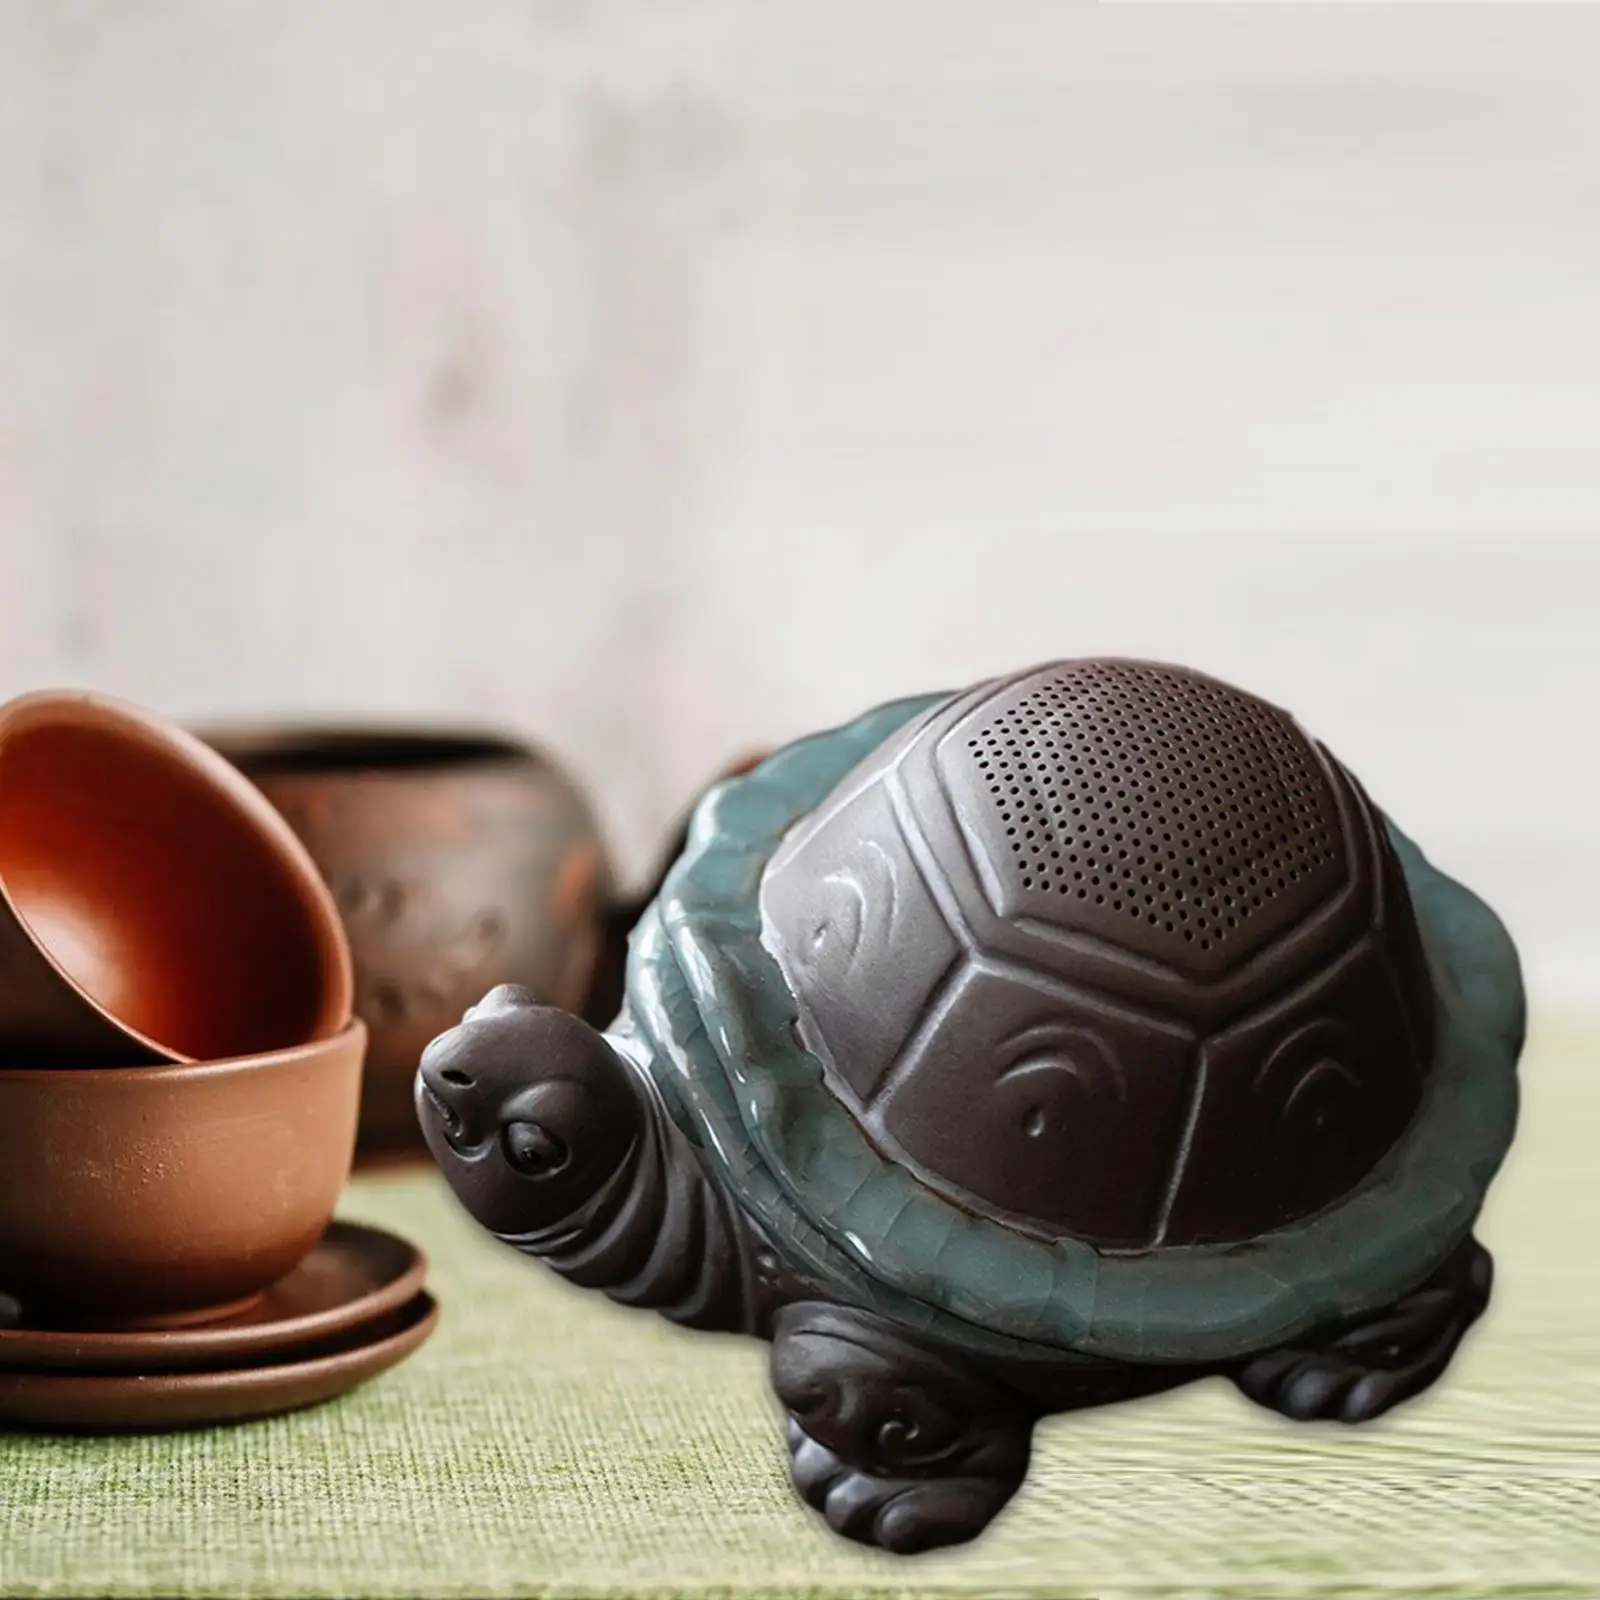 Tea Pet with Tea Filter Clay Miniature Home Desk Living Room Turtle Figurine